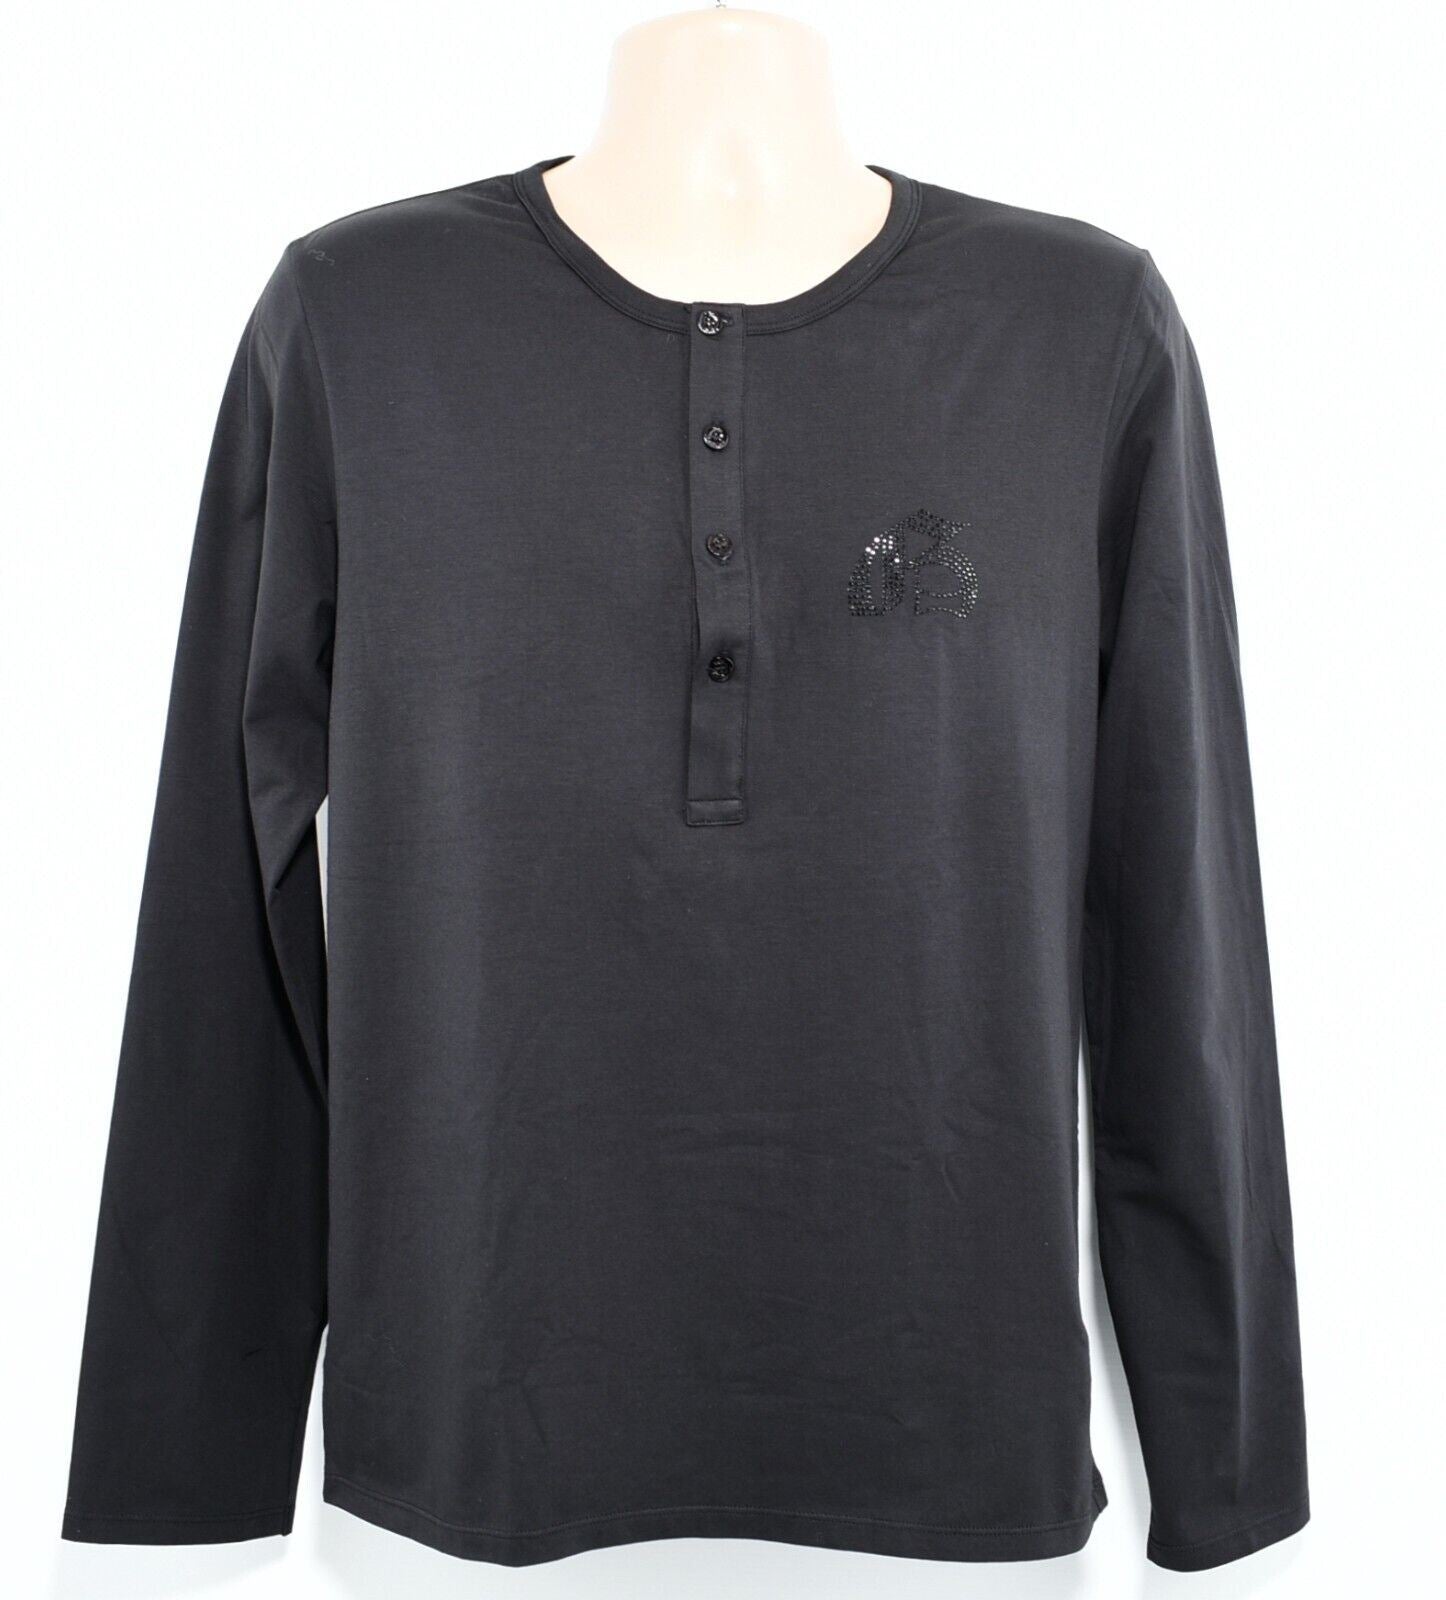 JOHN GALLIANO Underwear: Mens Long Sleeve Lounge T-shirt Top, Black, size LARGE